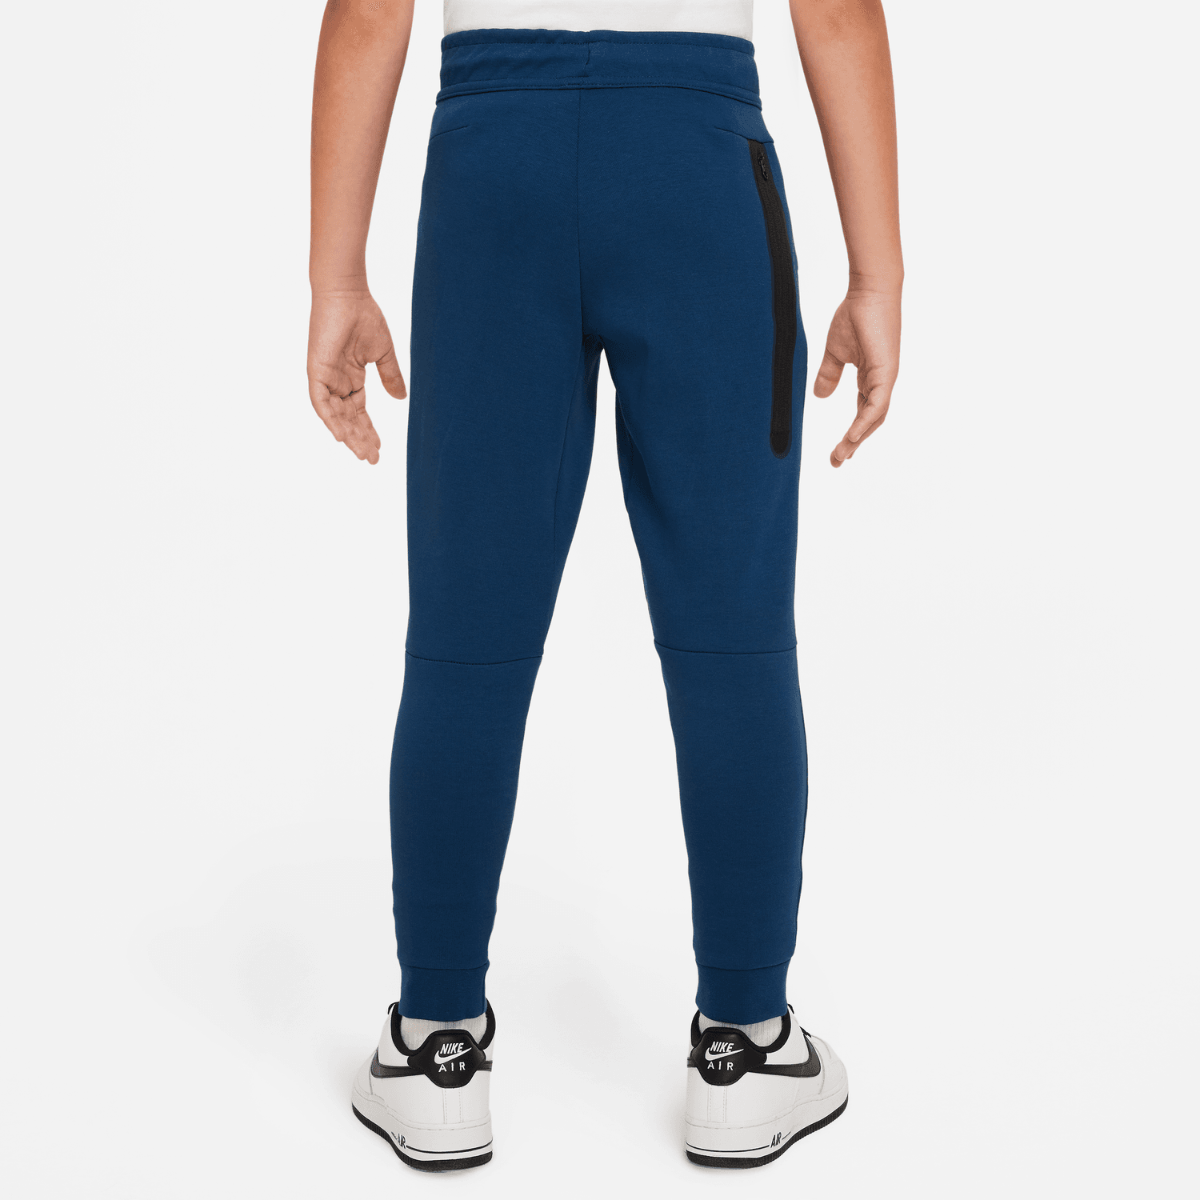 Pantalon jogging Nike Tech Fleece Junior - Bleu Marine/Noir